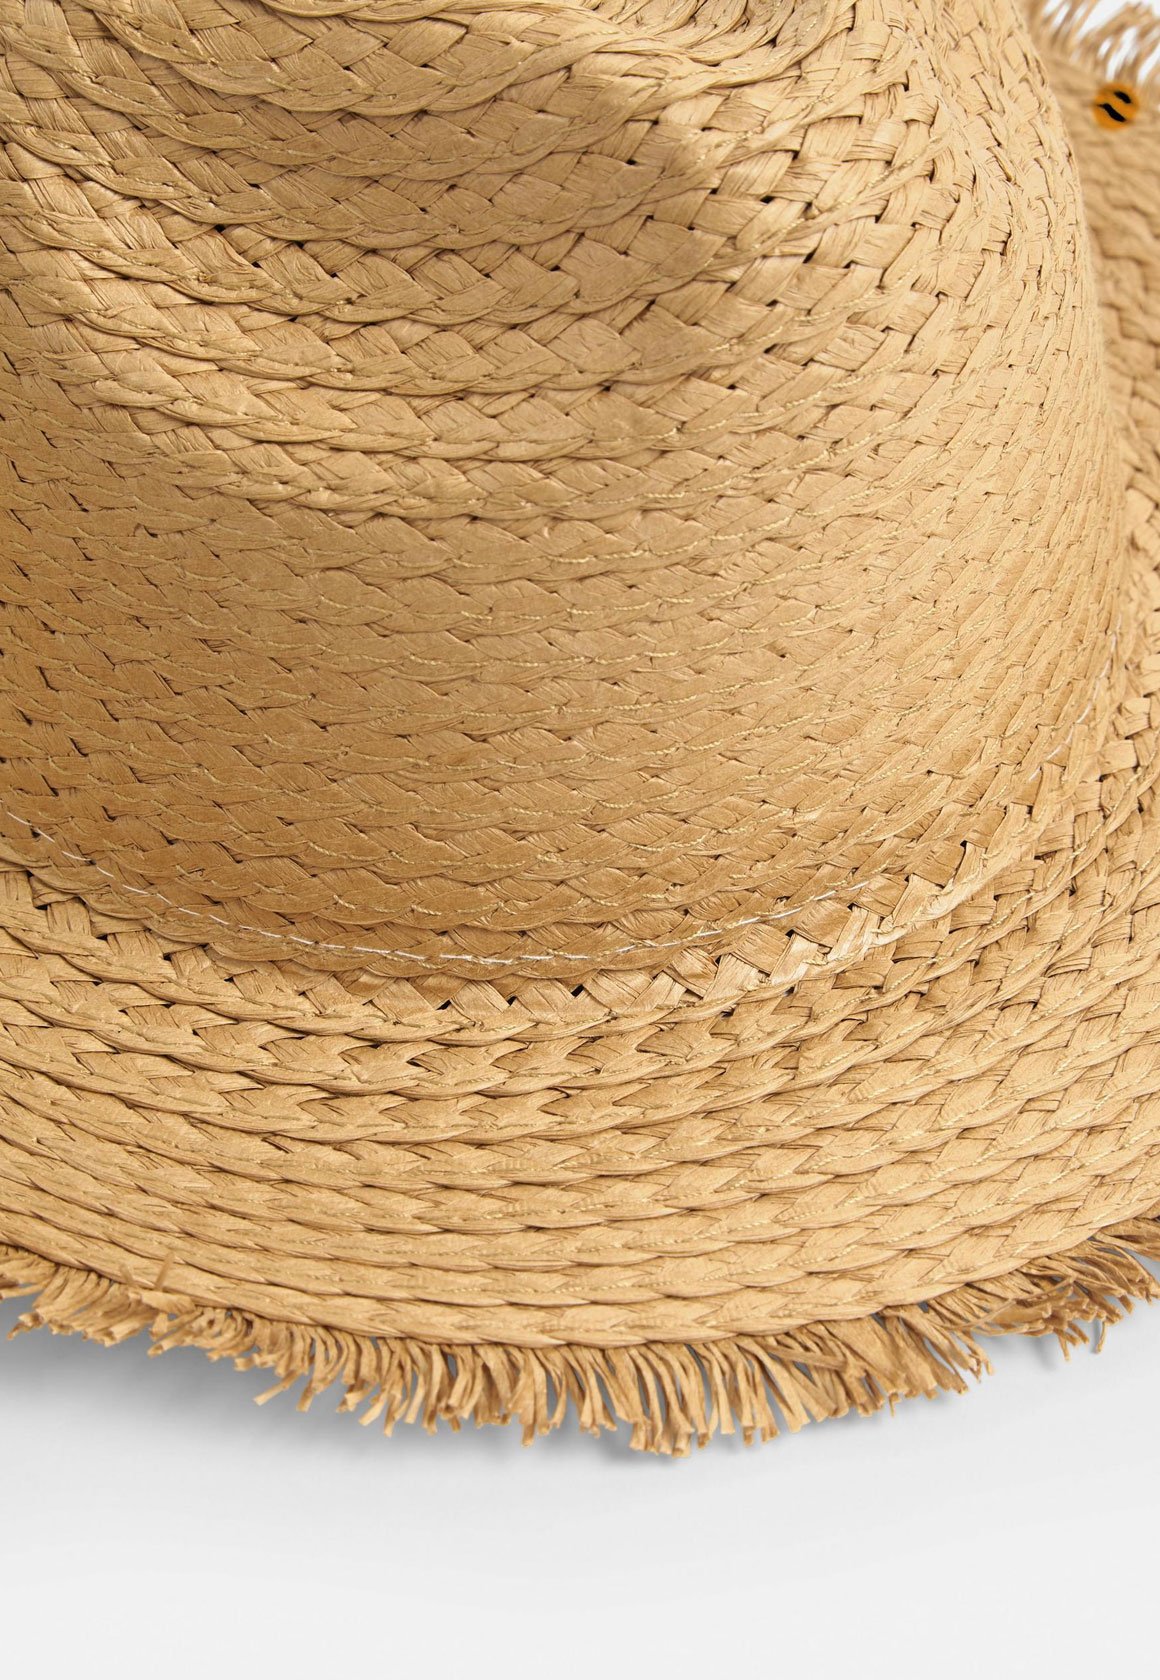 Life of soleil straw hat